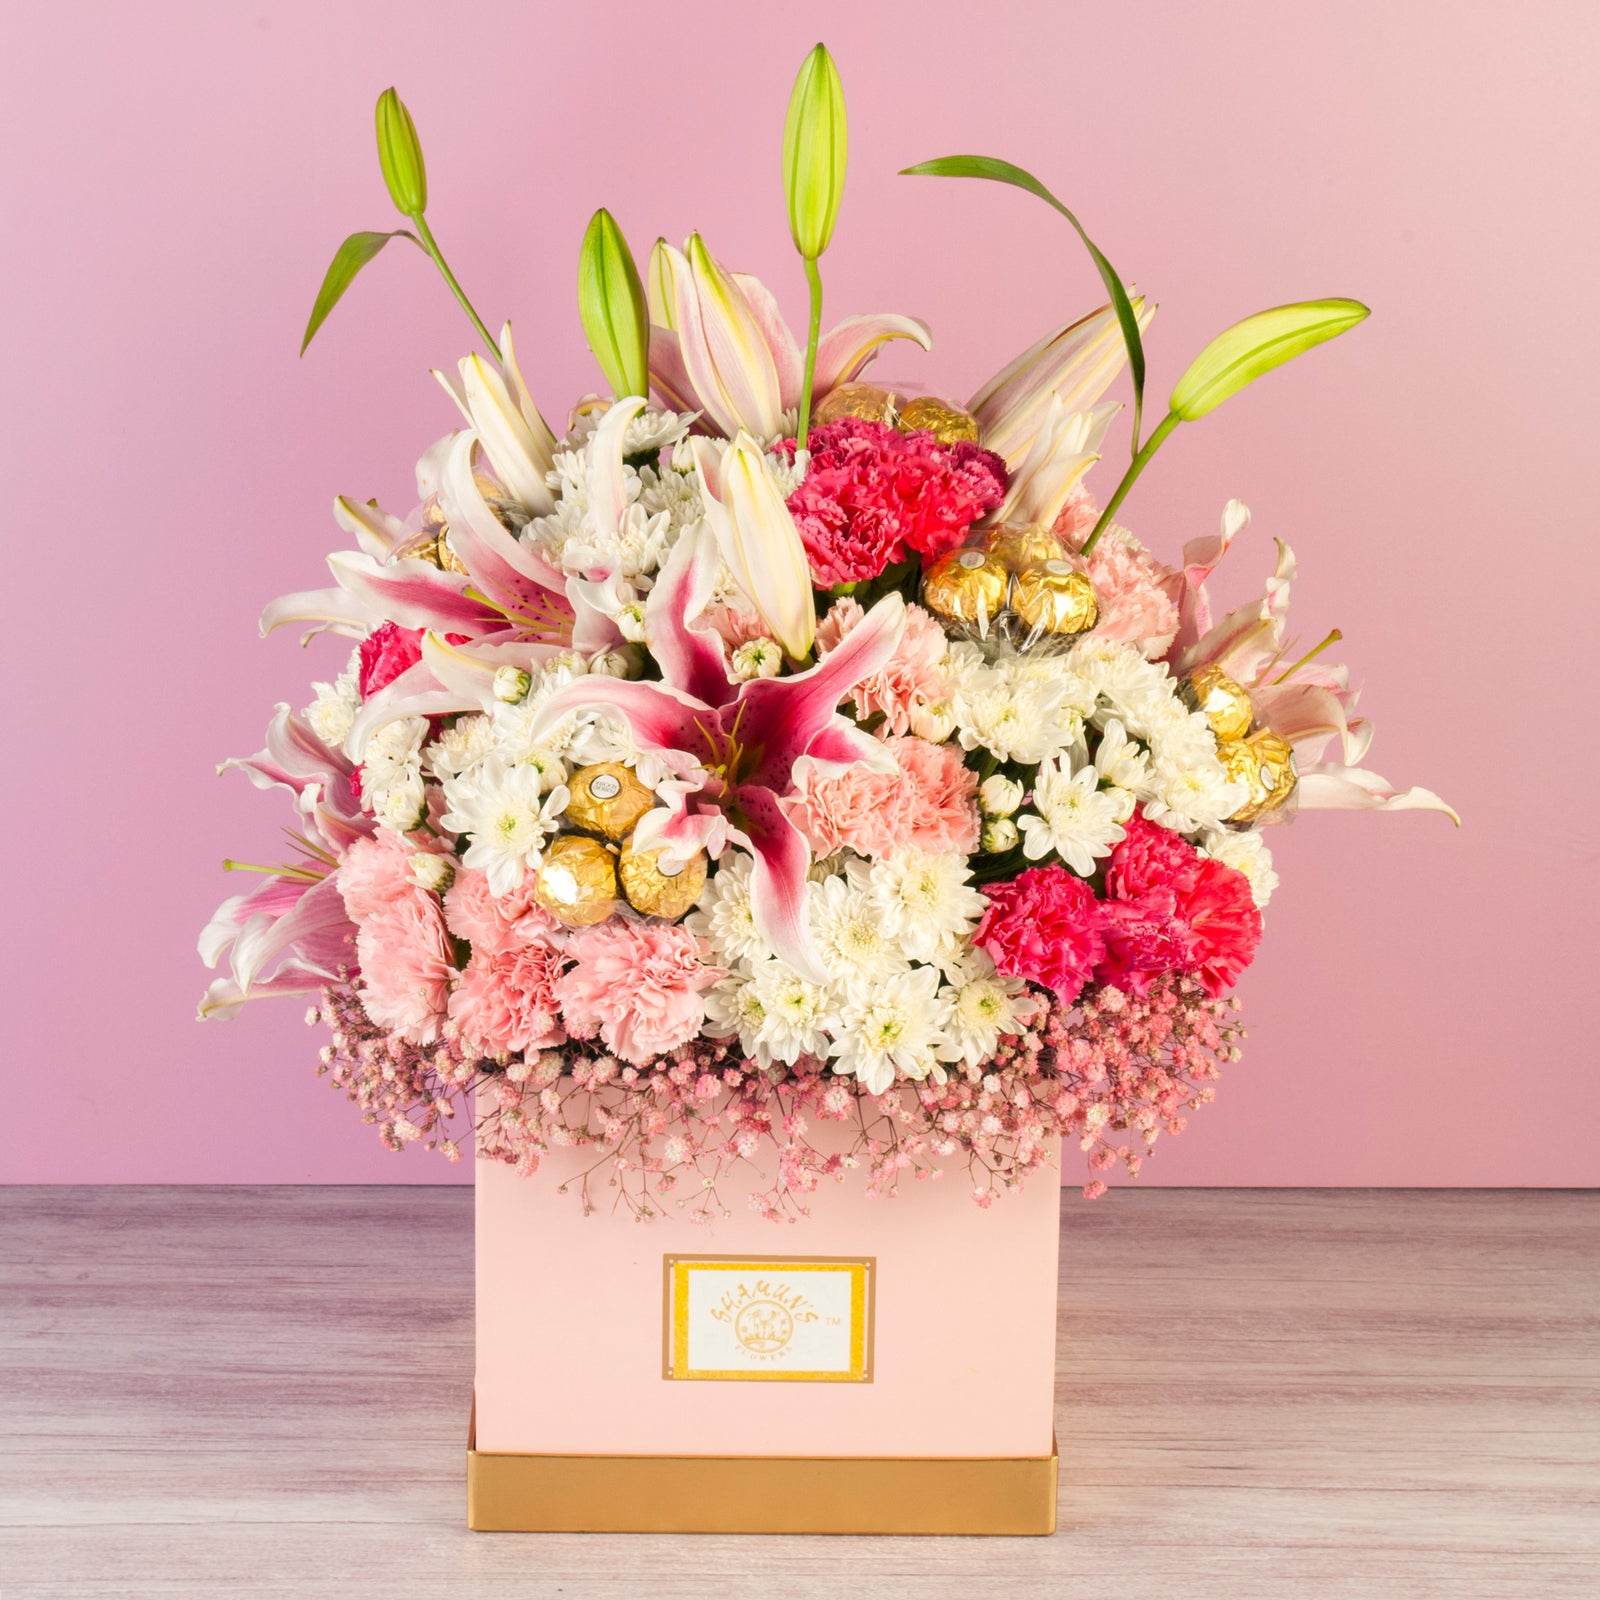 Delivery Of Flowers & Ferrero Rochers In A Box 